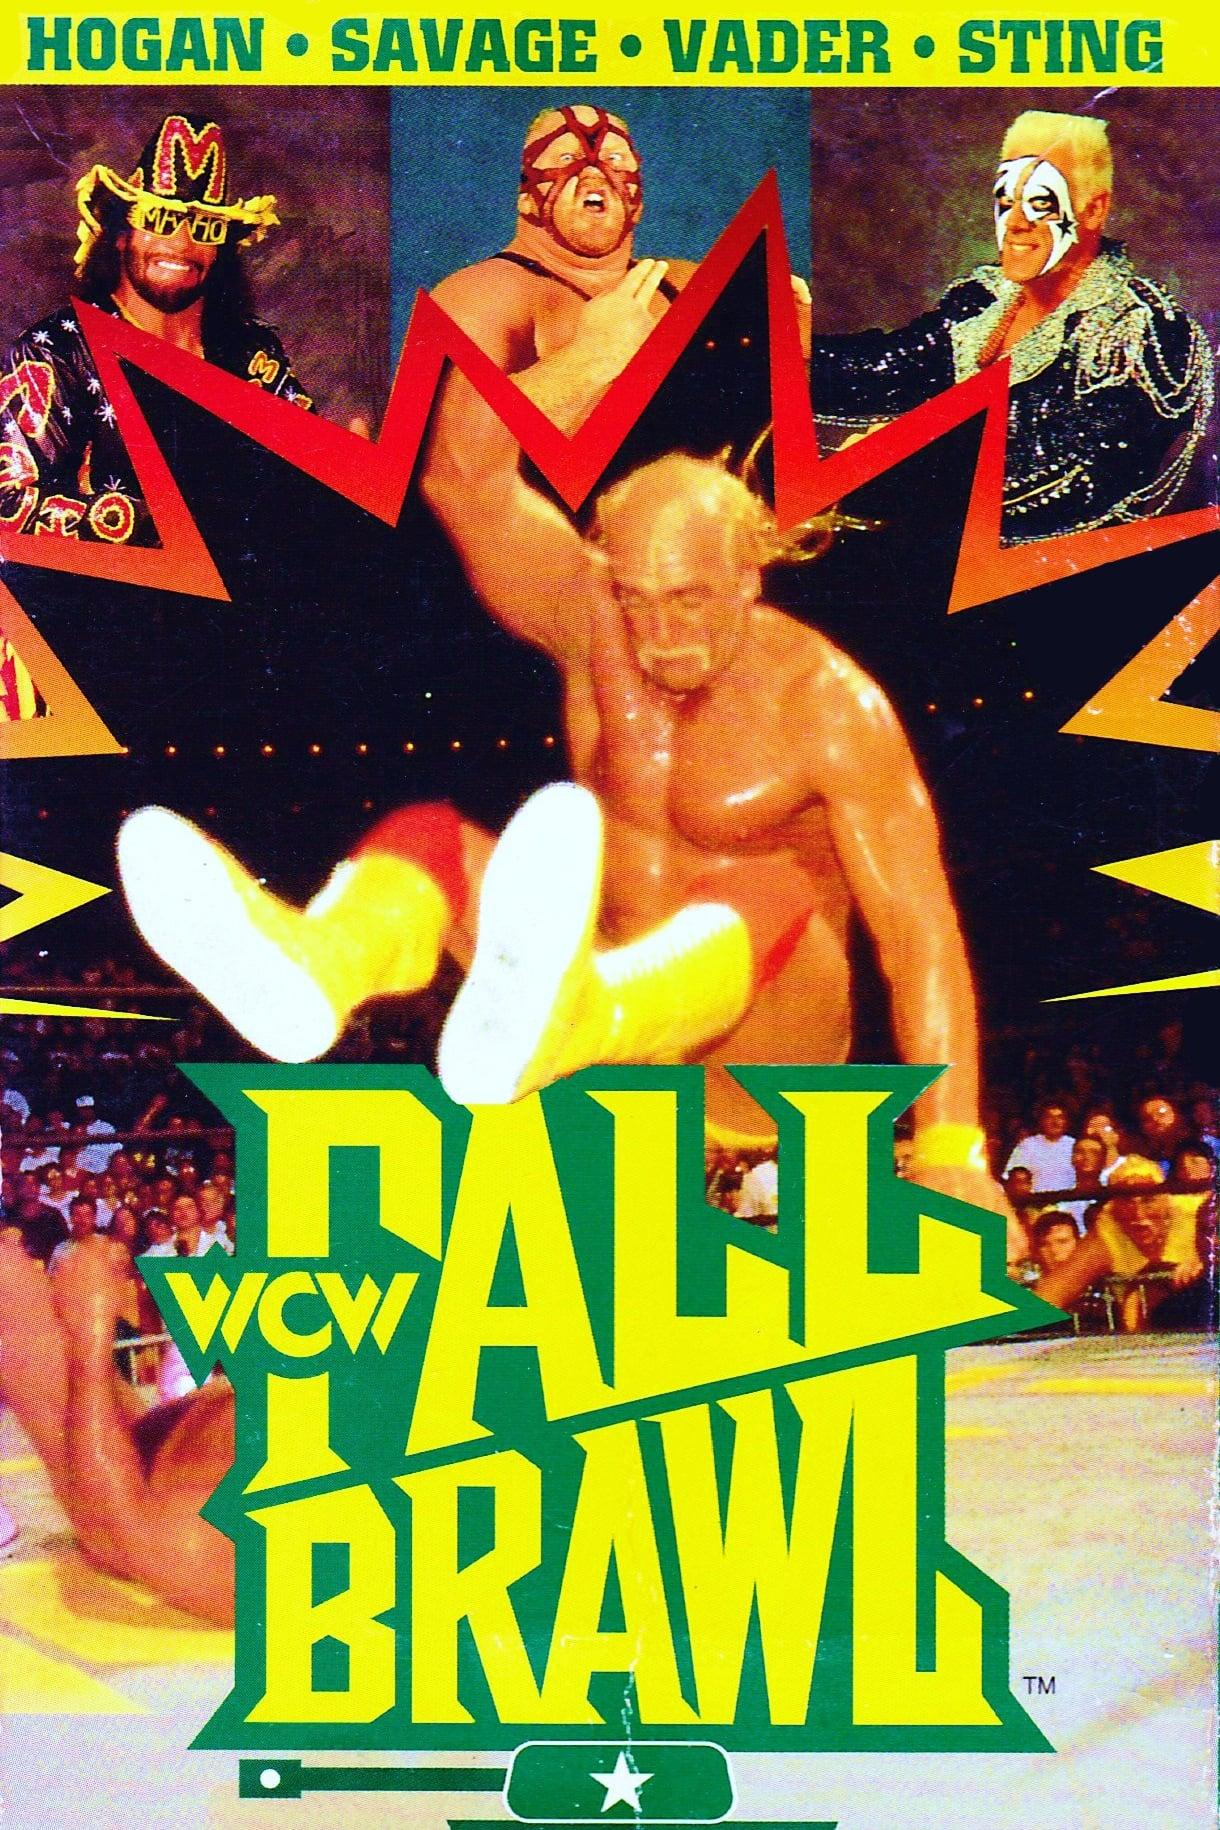 WCW Fall Brawl 1995 poster